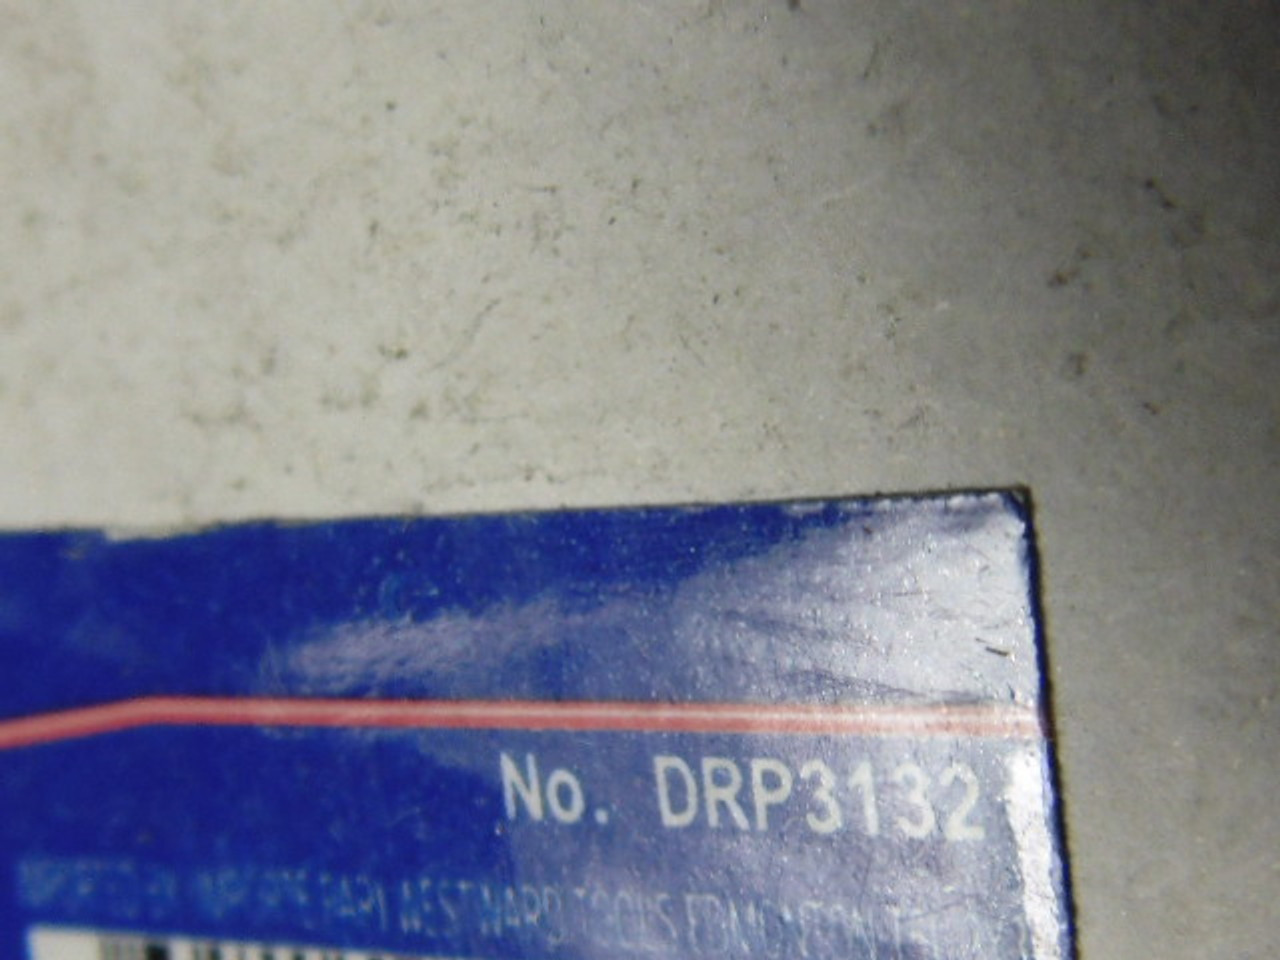 Westward DRP3132 Bit Drill Prentice 31/32 Inch USED